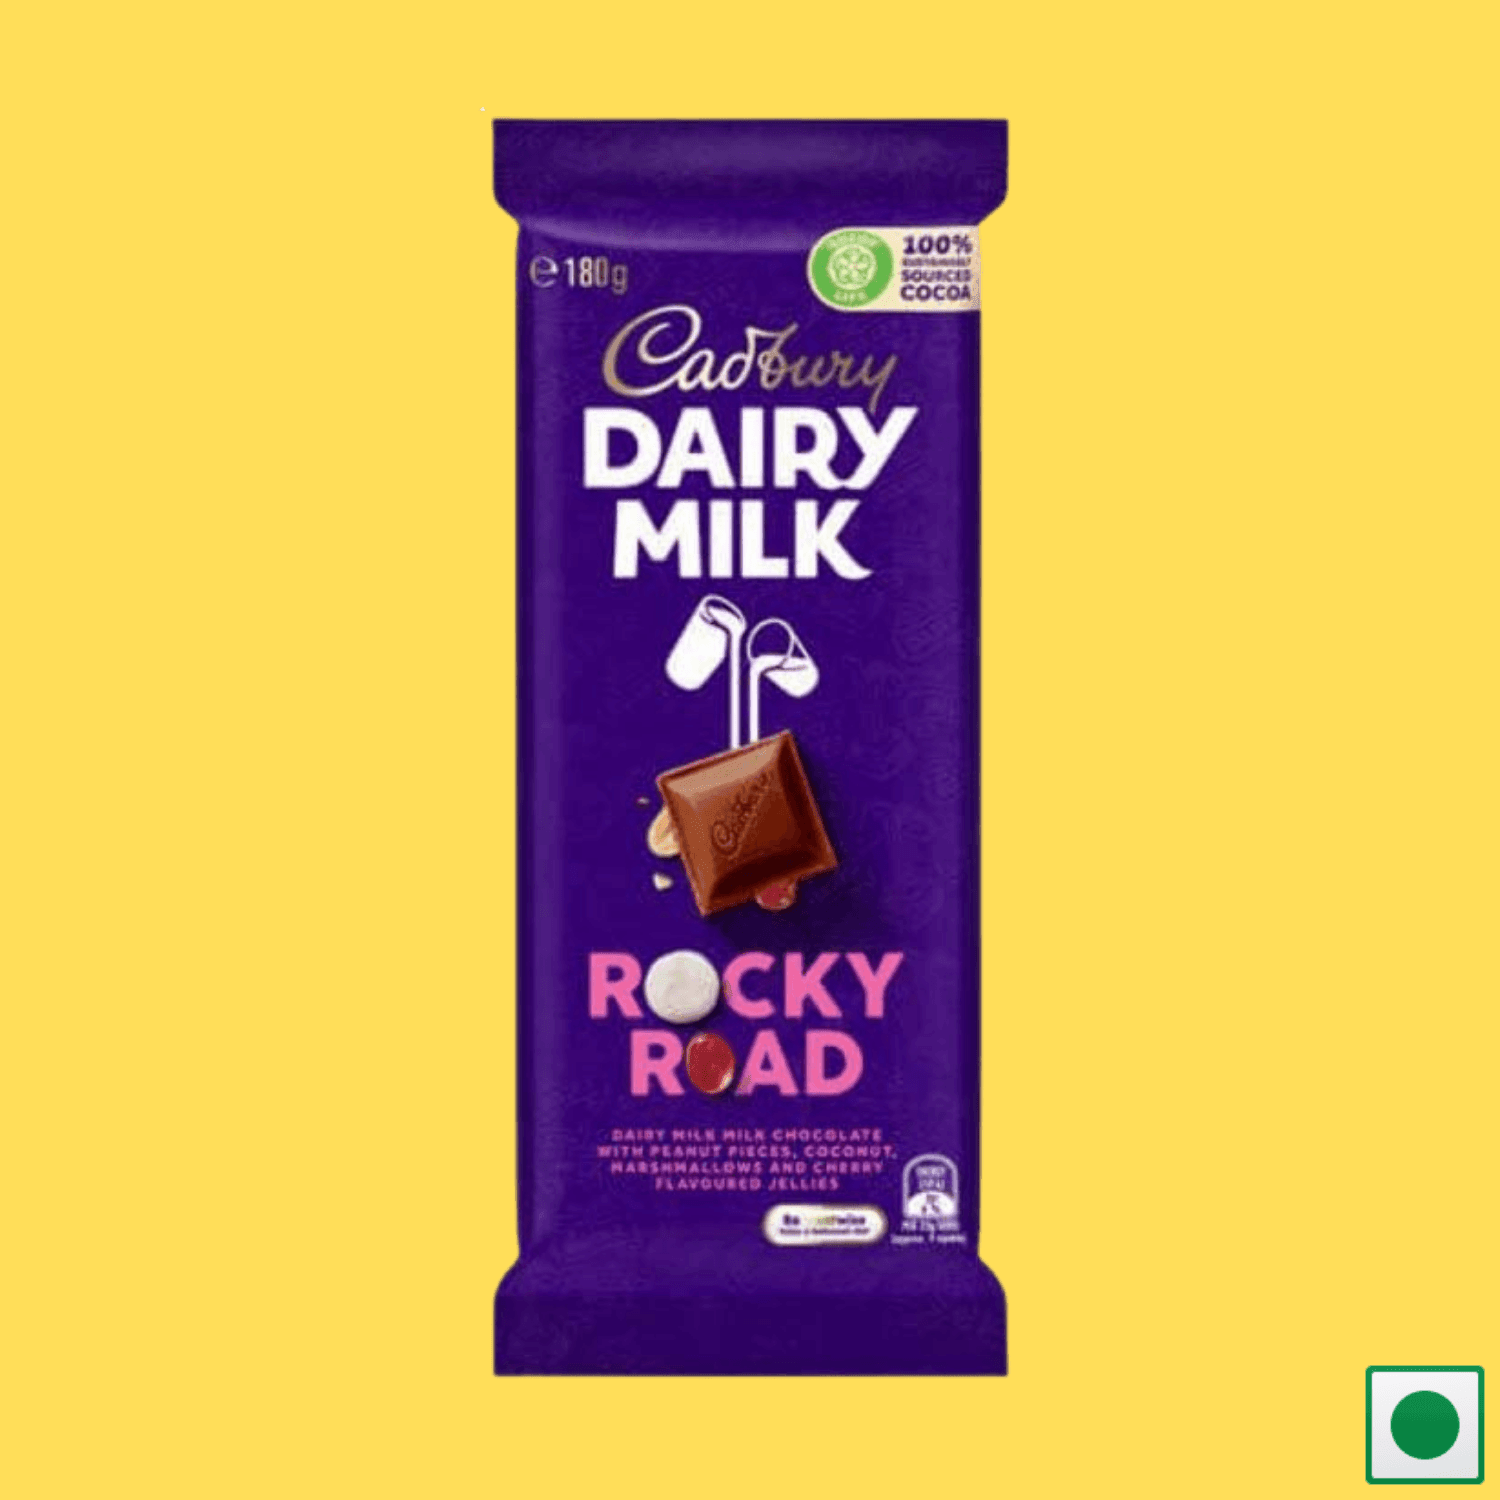 Cadbury Dairy Milk Rocky Road Chocolate,180g (Australian Imported) - Super 7 Mart